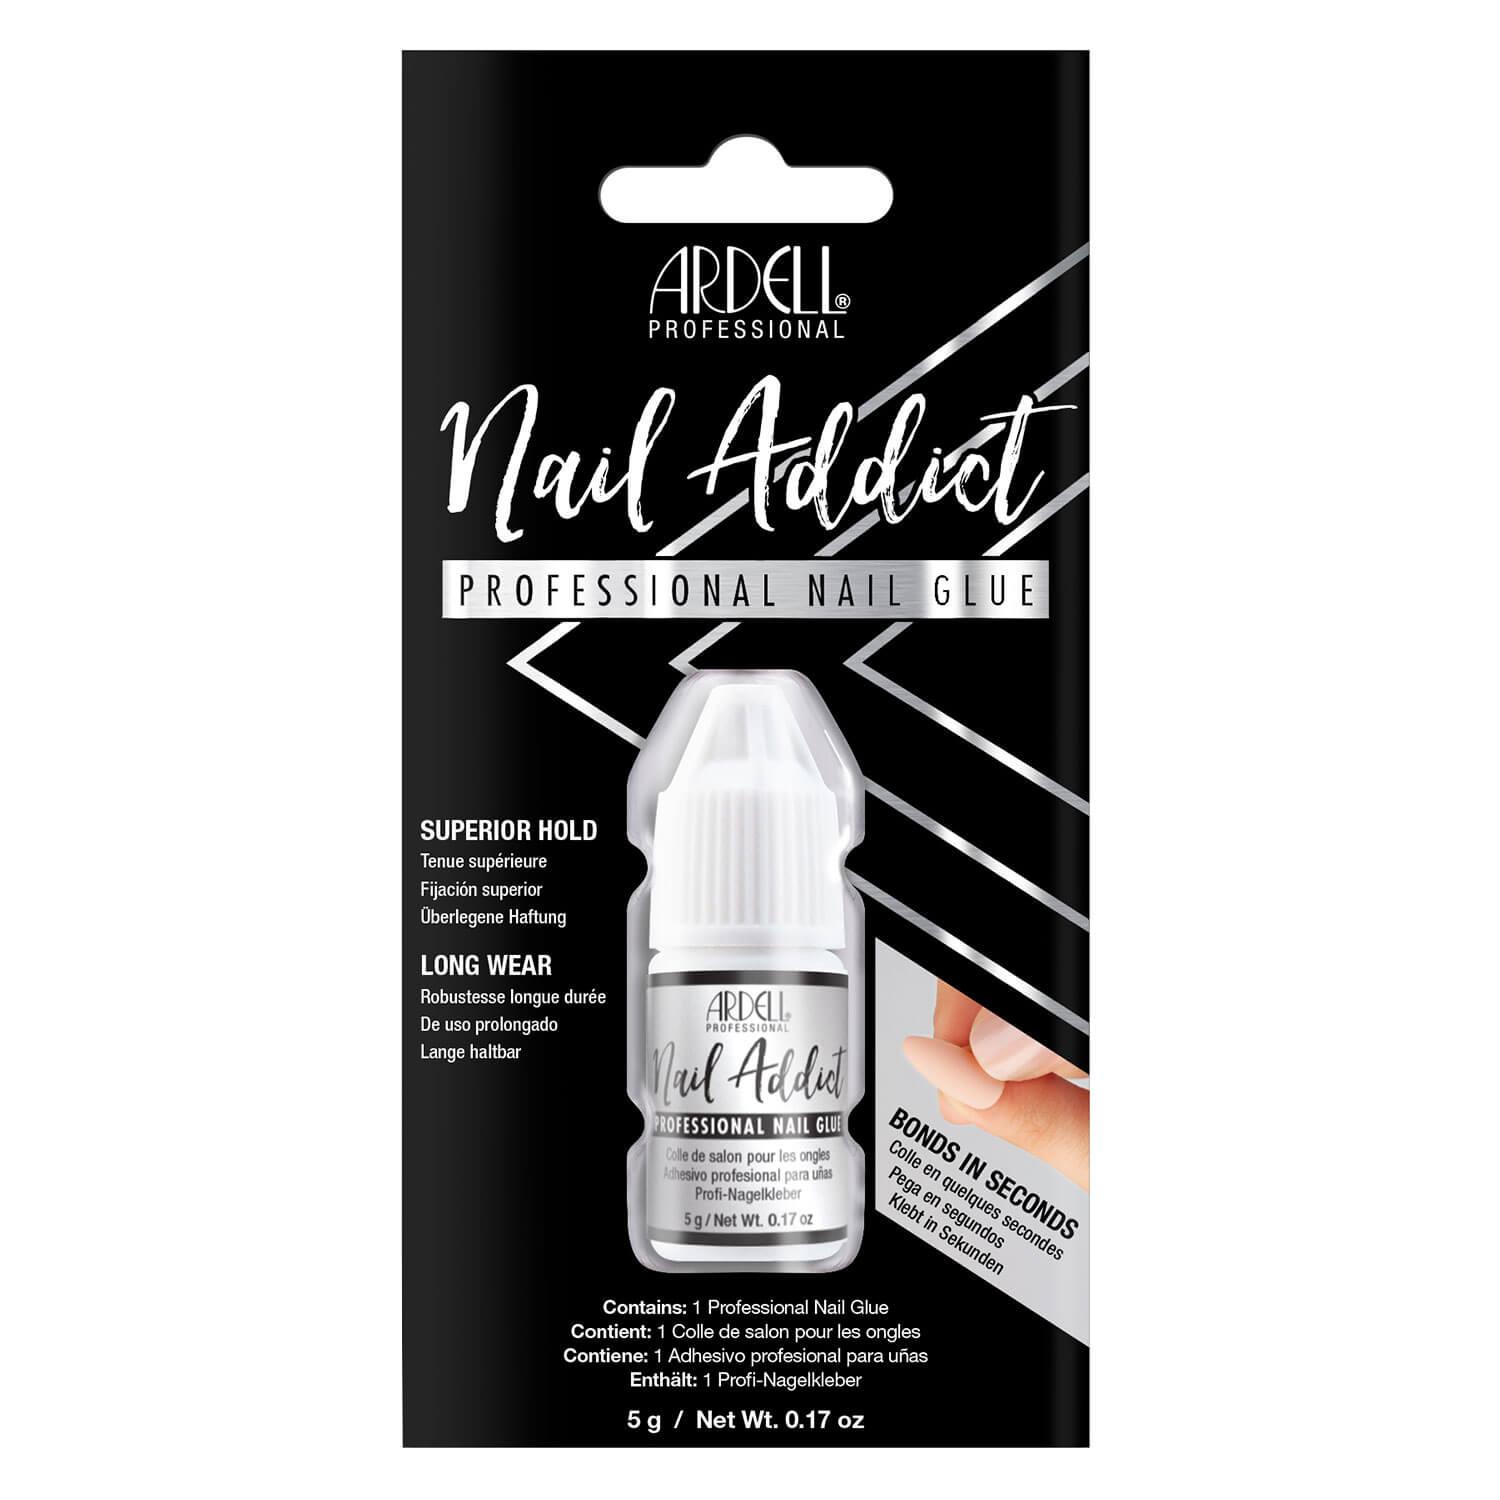 Nail Addict - Nail Addict Professional Nail Glue